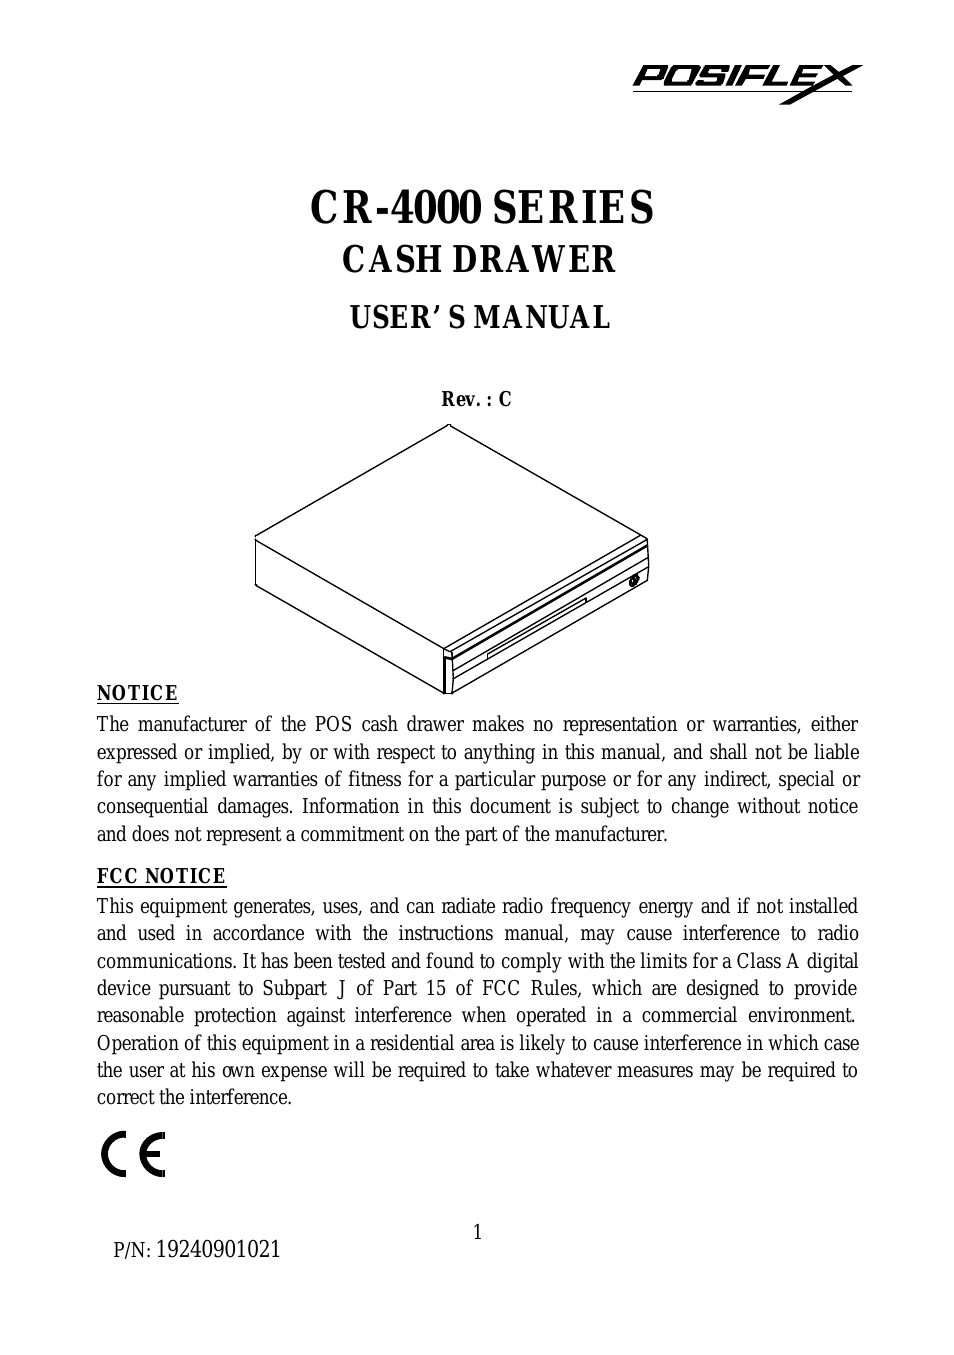 Cash Drawer CR400X